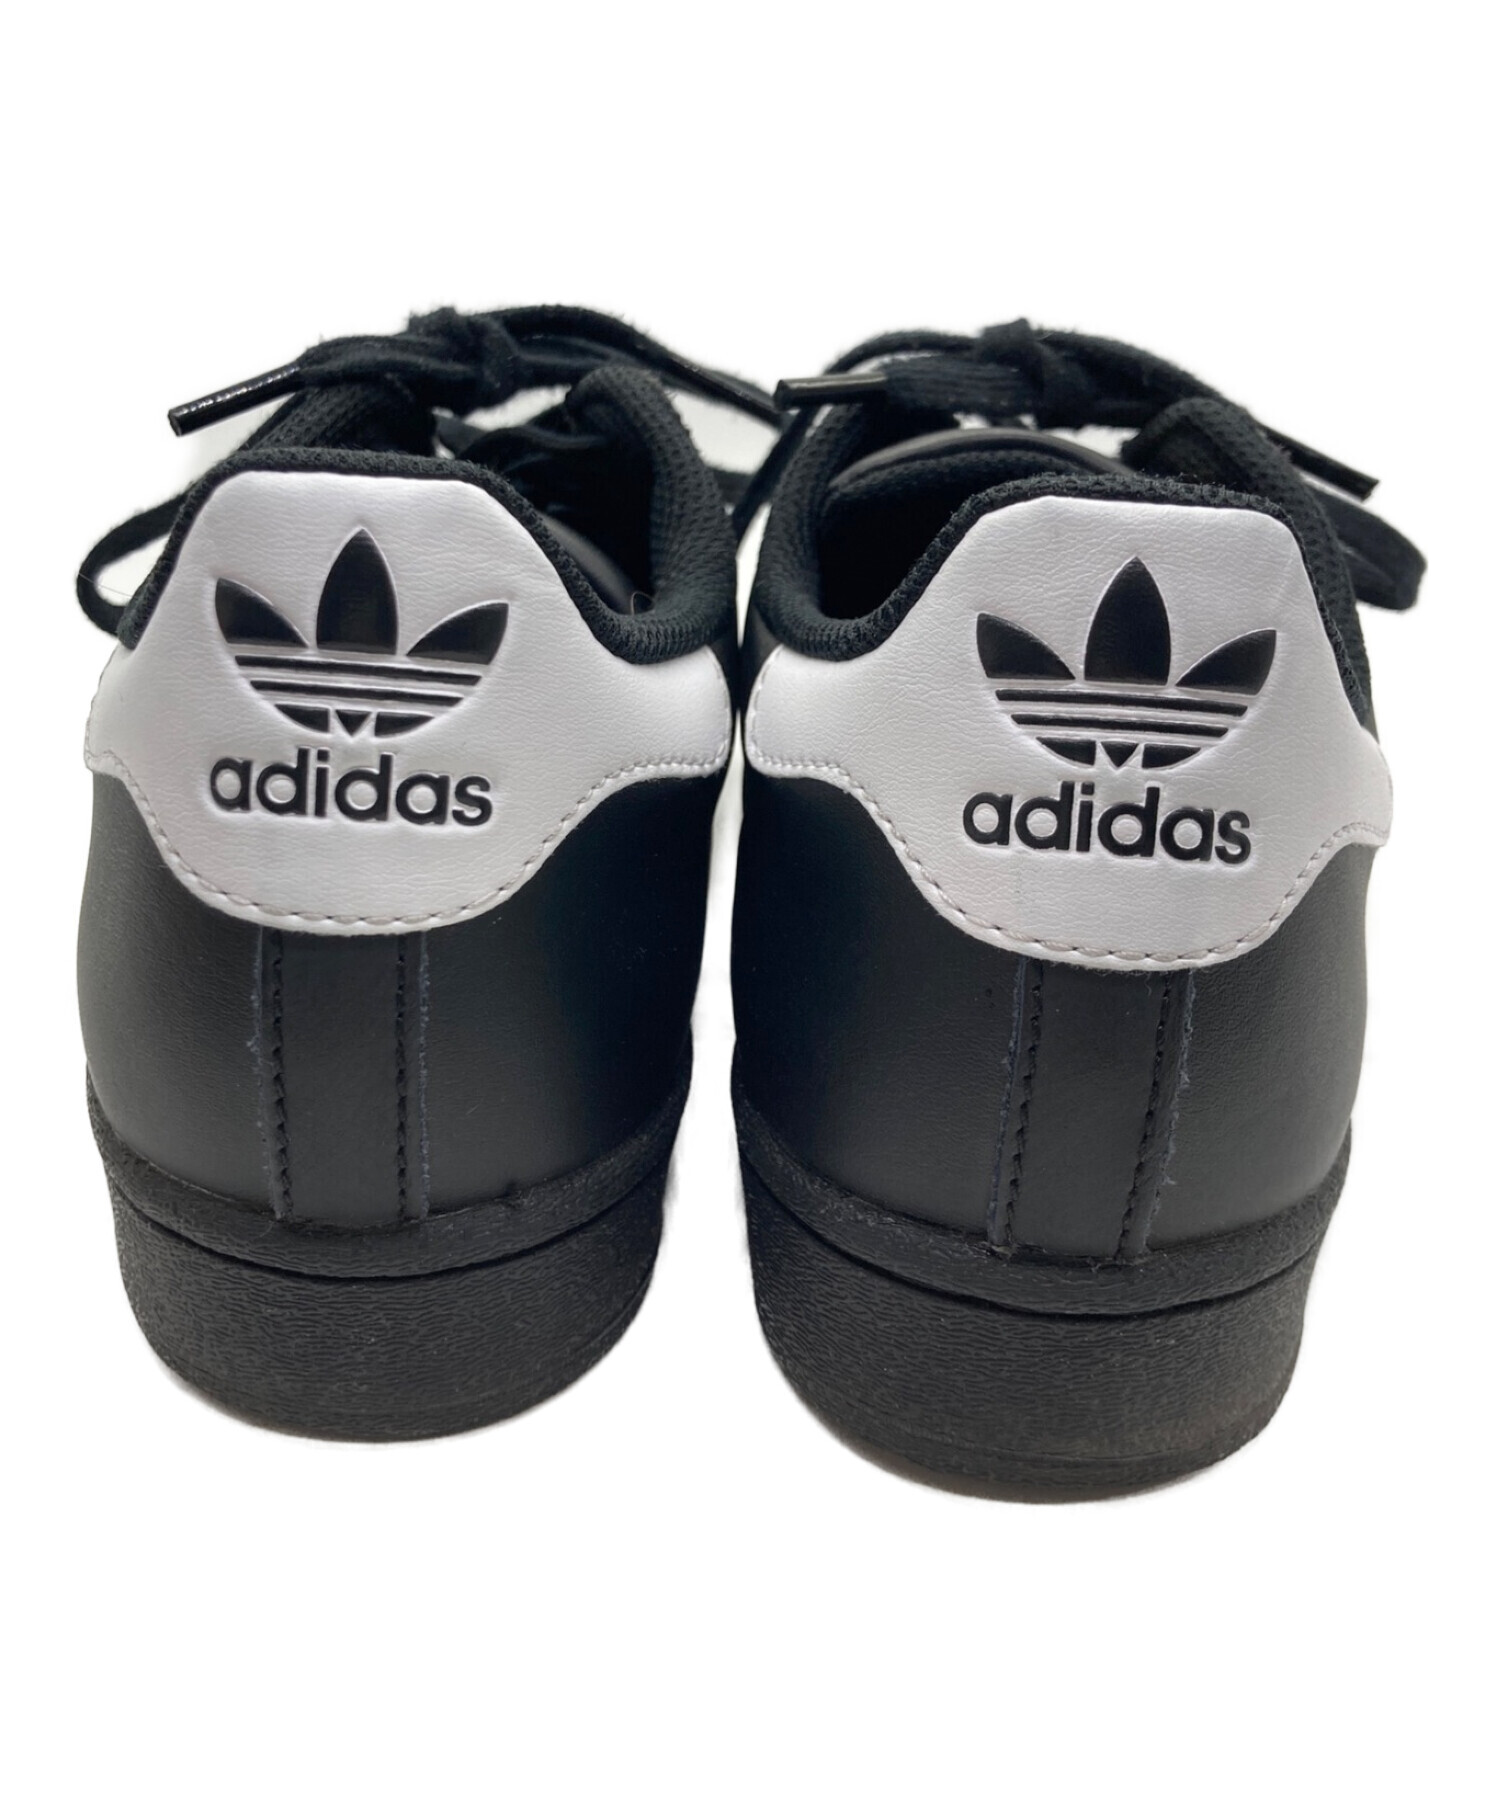 adidas (アディダス) スーパースター ブラック サイズ:25.5